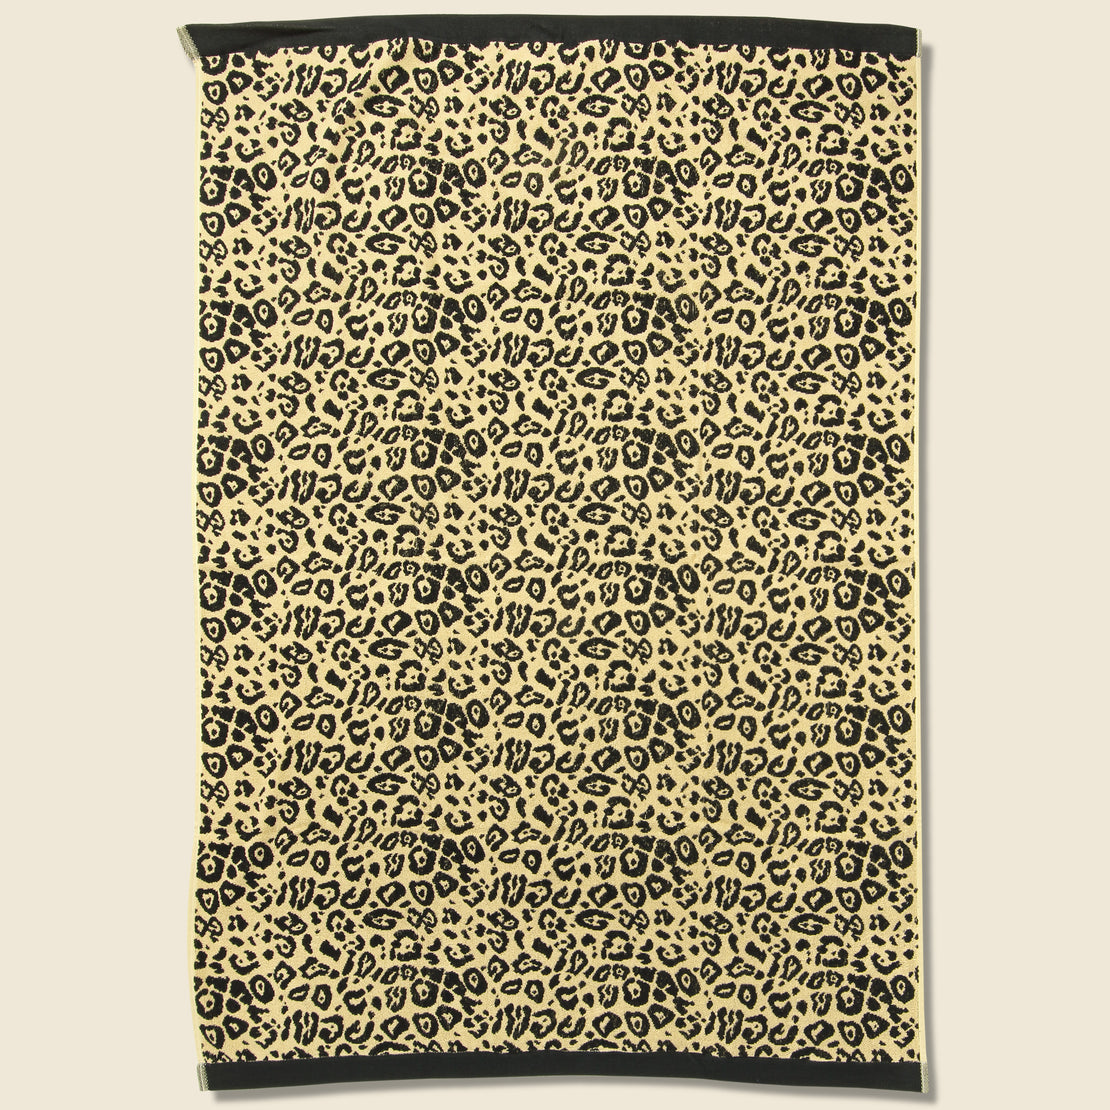 OAS Leo Towel - Leopard Print